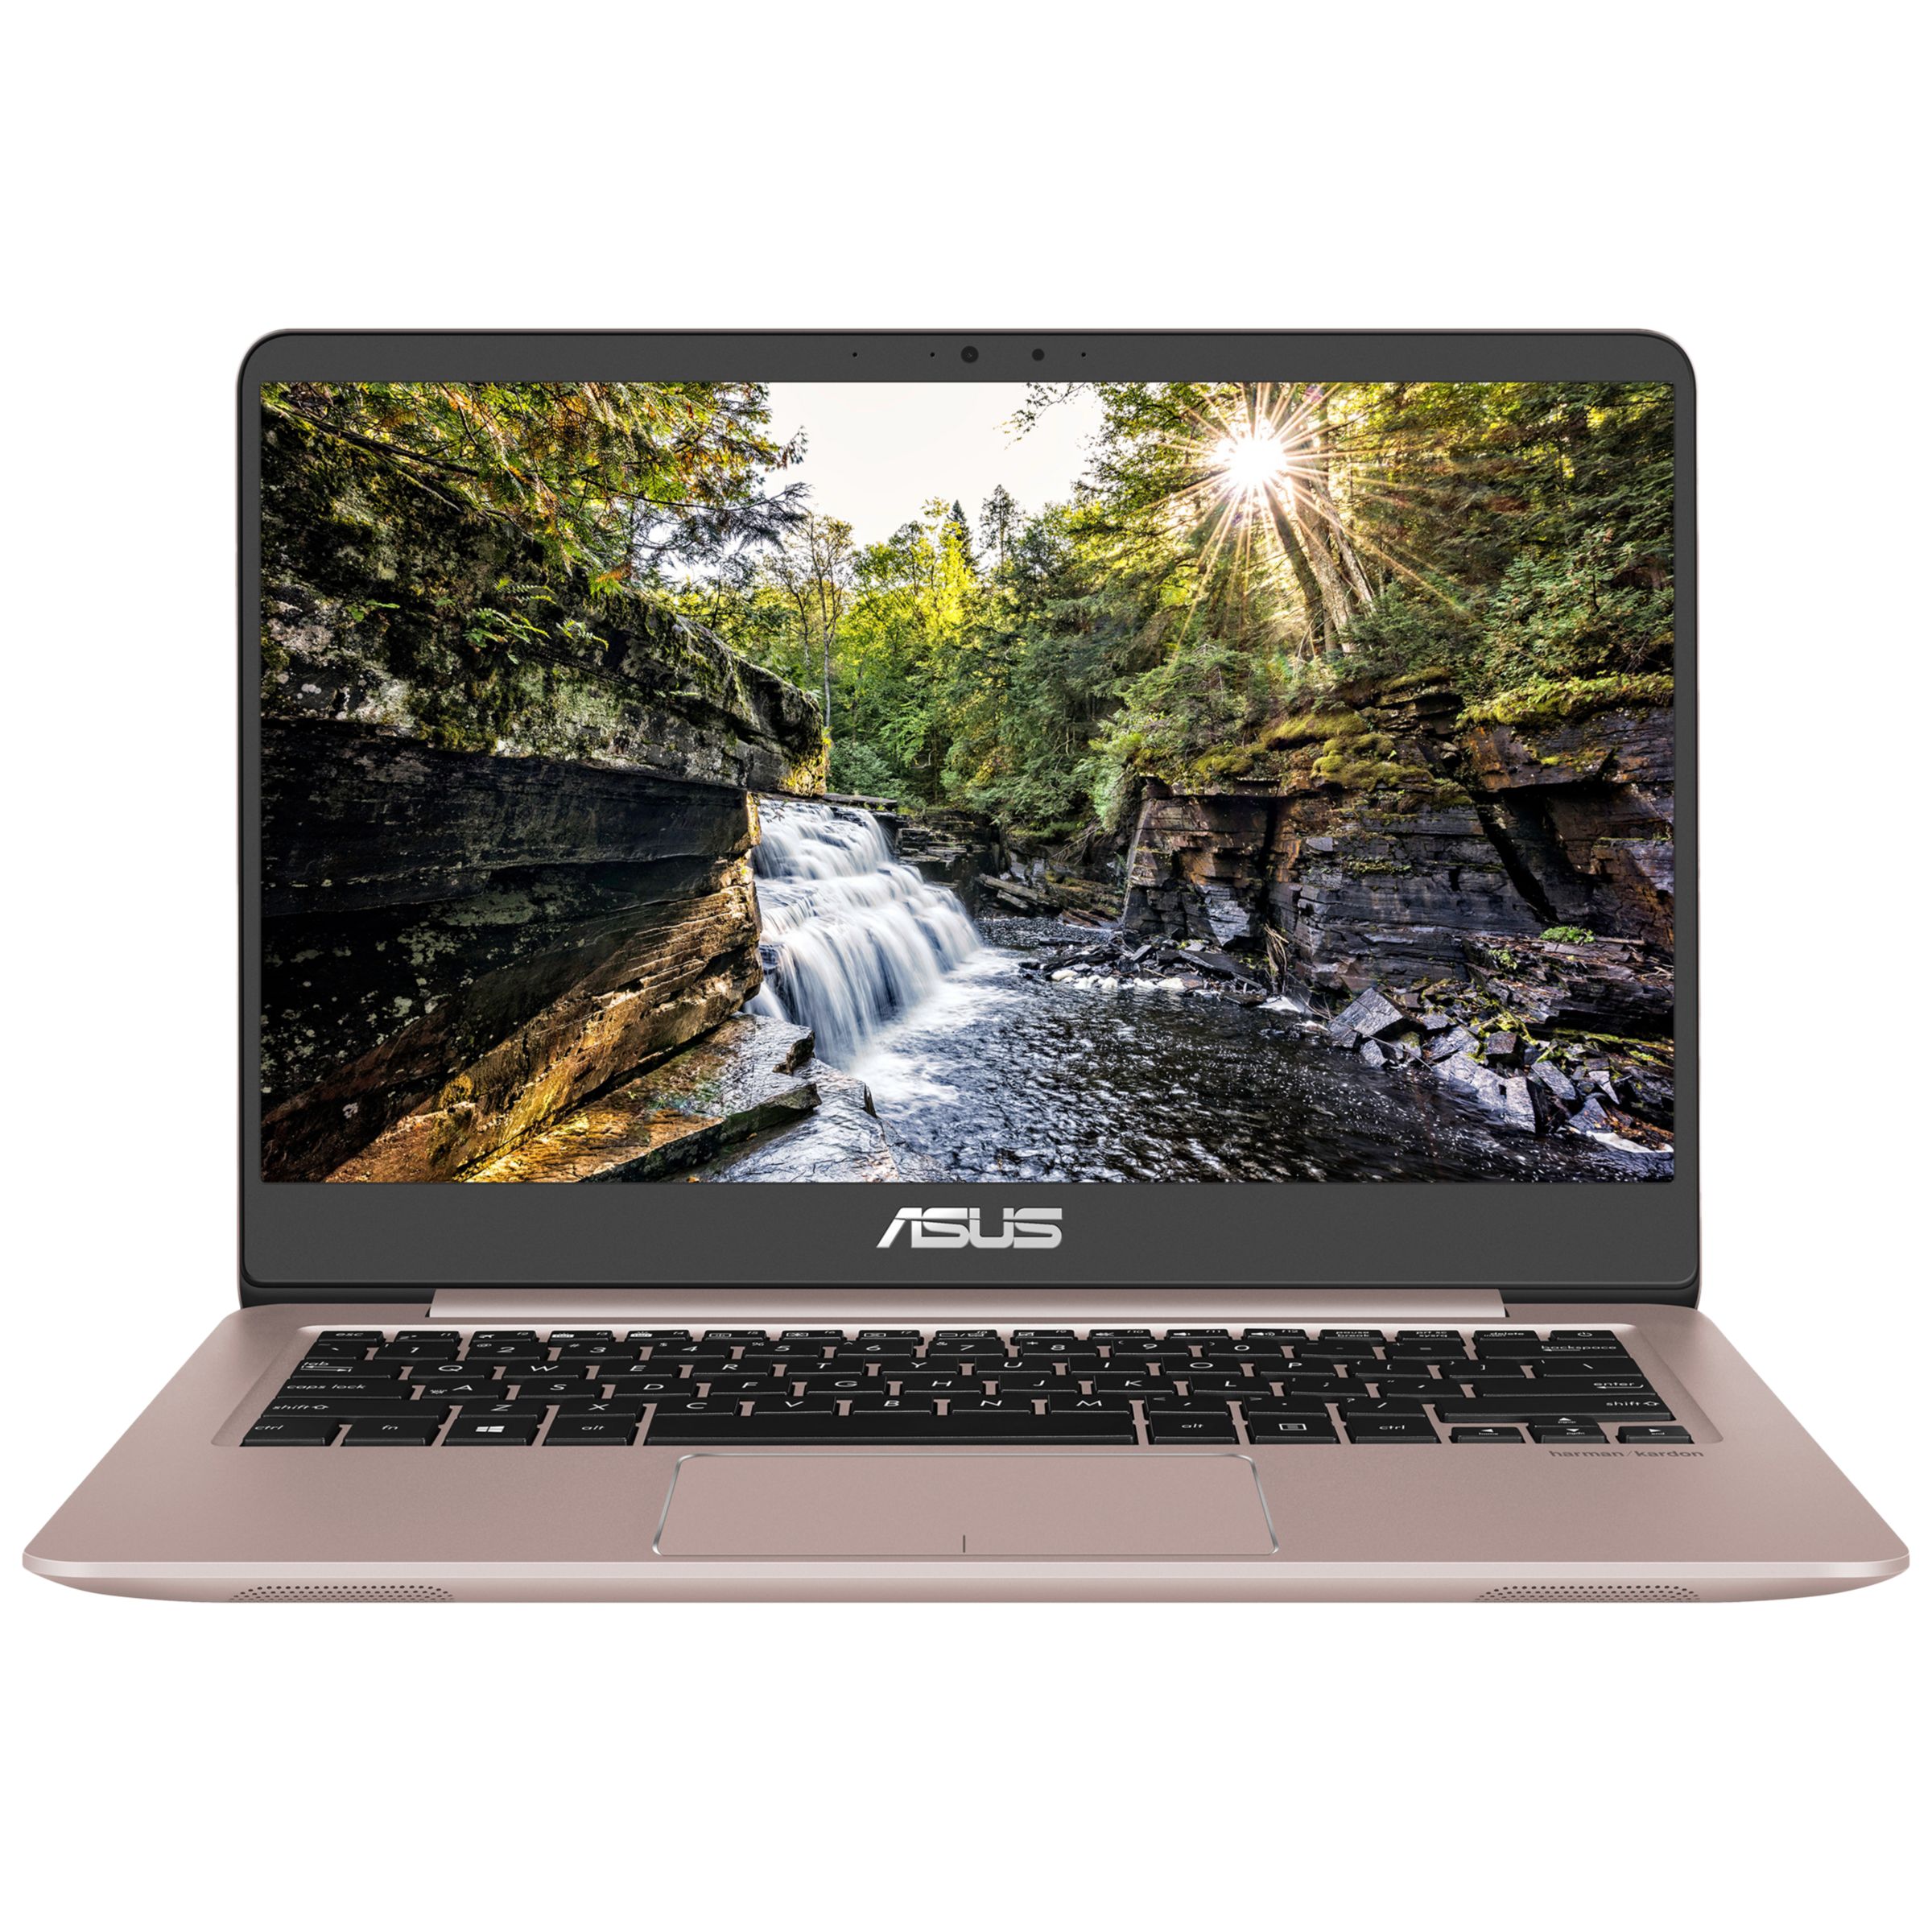 ASUS ZenBook UX410UA-GV547T Laptop, Intel Core i3, 4GB RAM, 256GB SSD, 14”, Full HD, Rose Gold